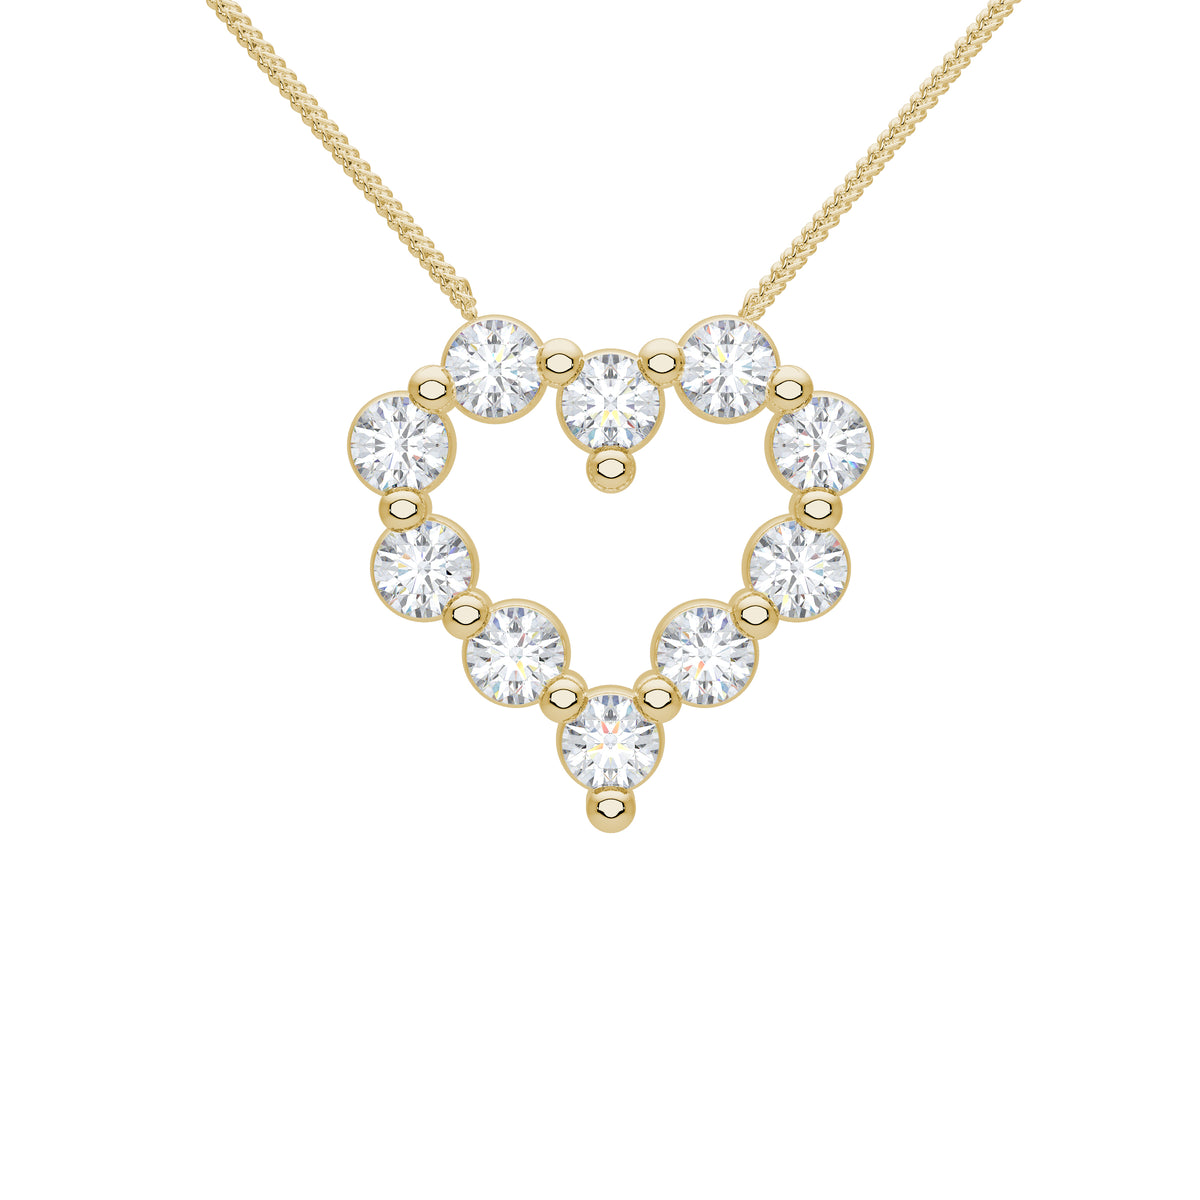 Little Midi Charlie Cloud® Floating Diamond Heart Necklace 1.20 ctw